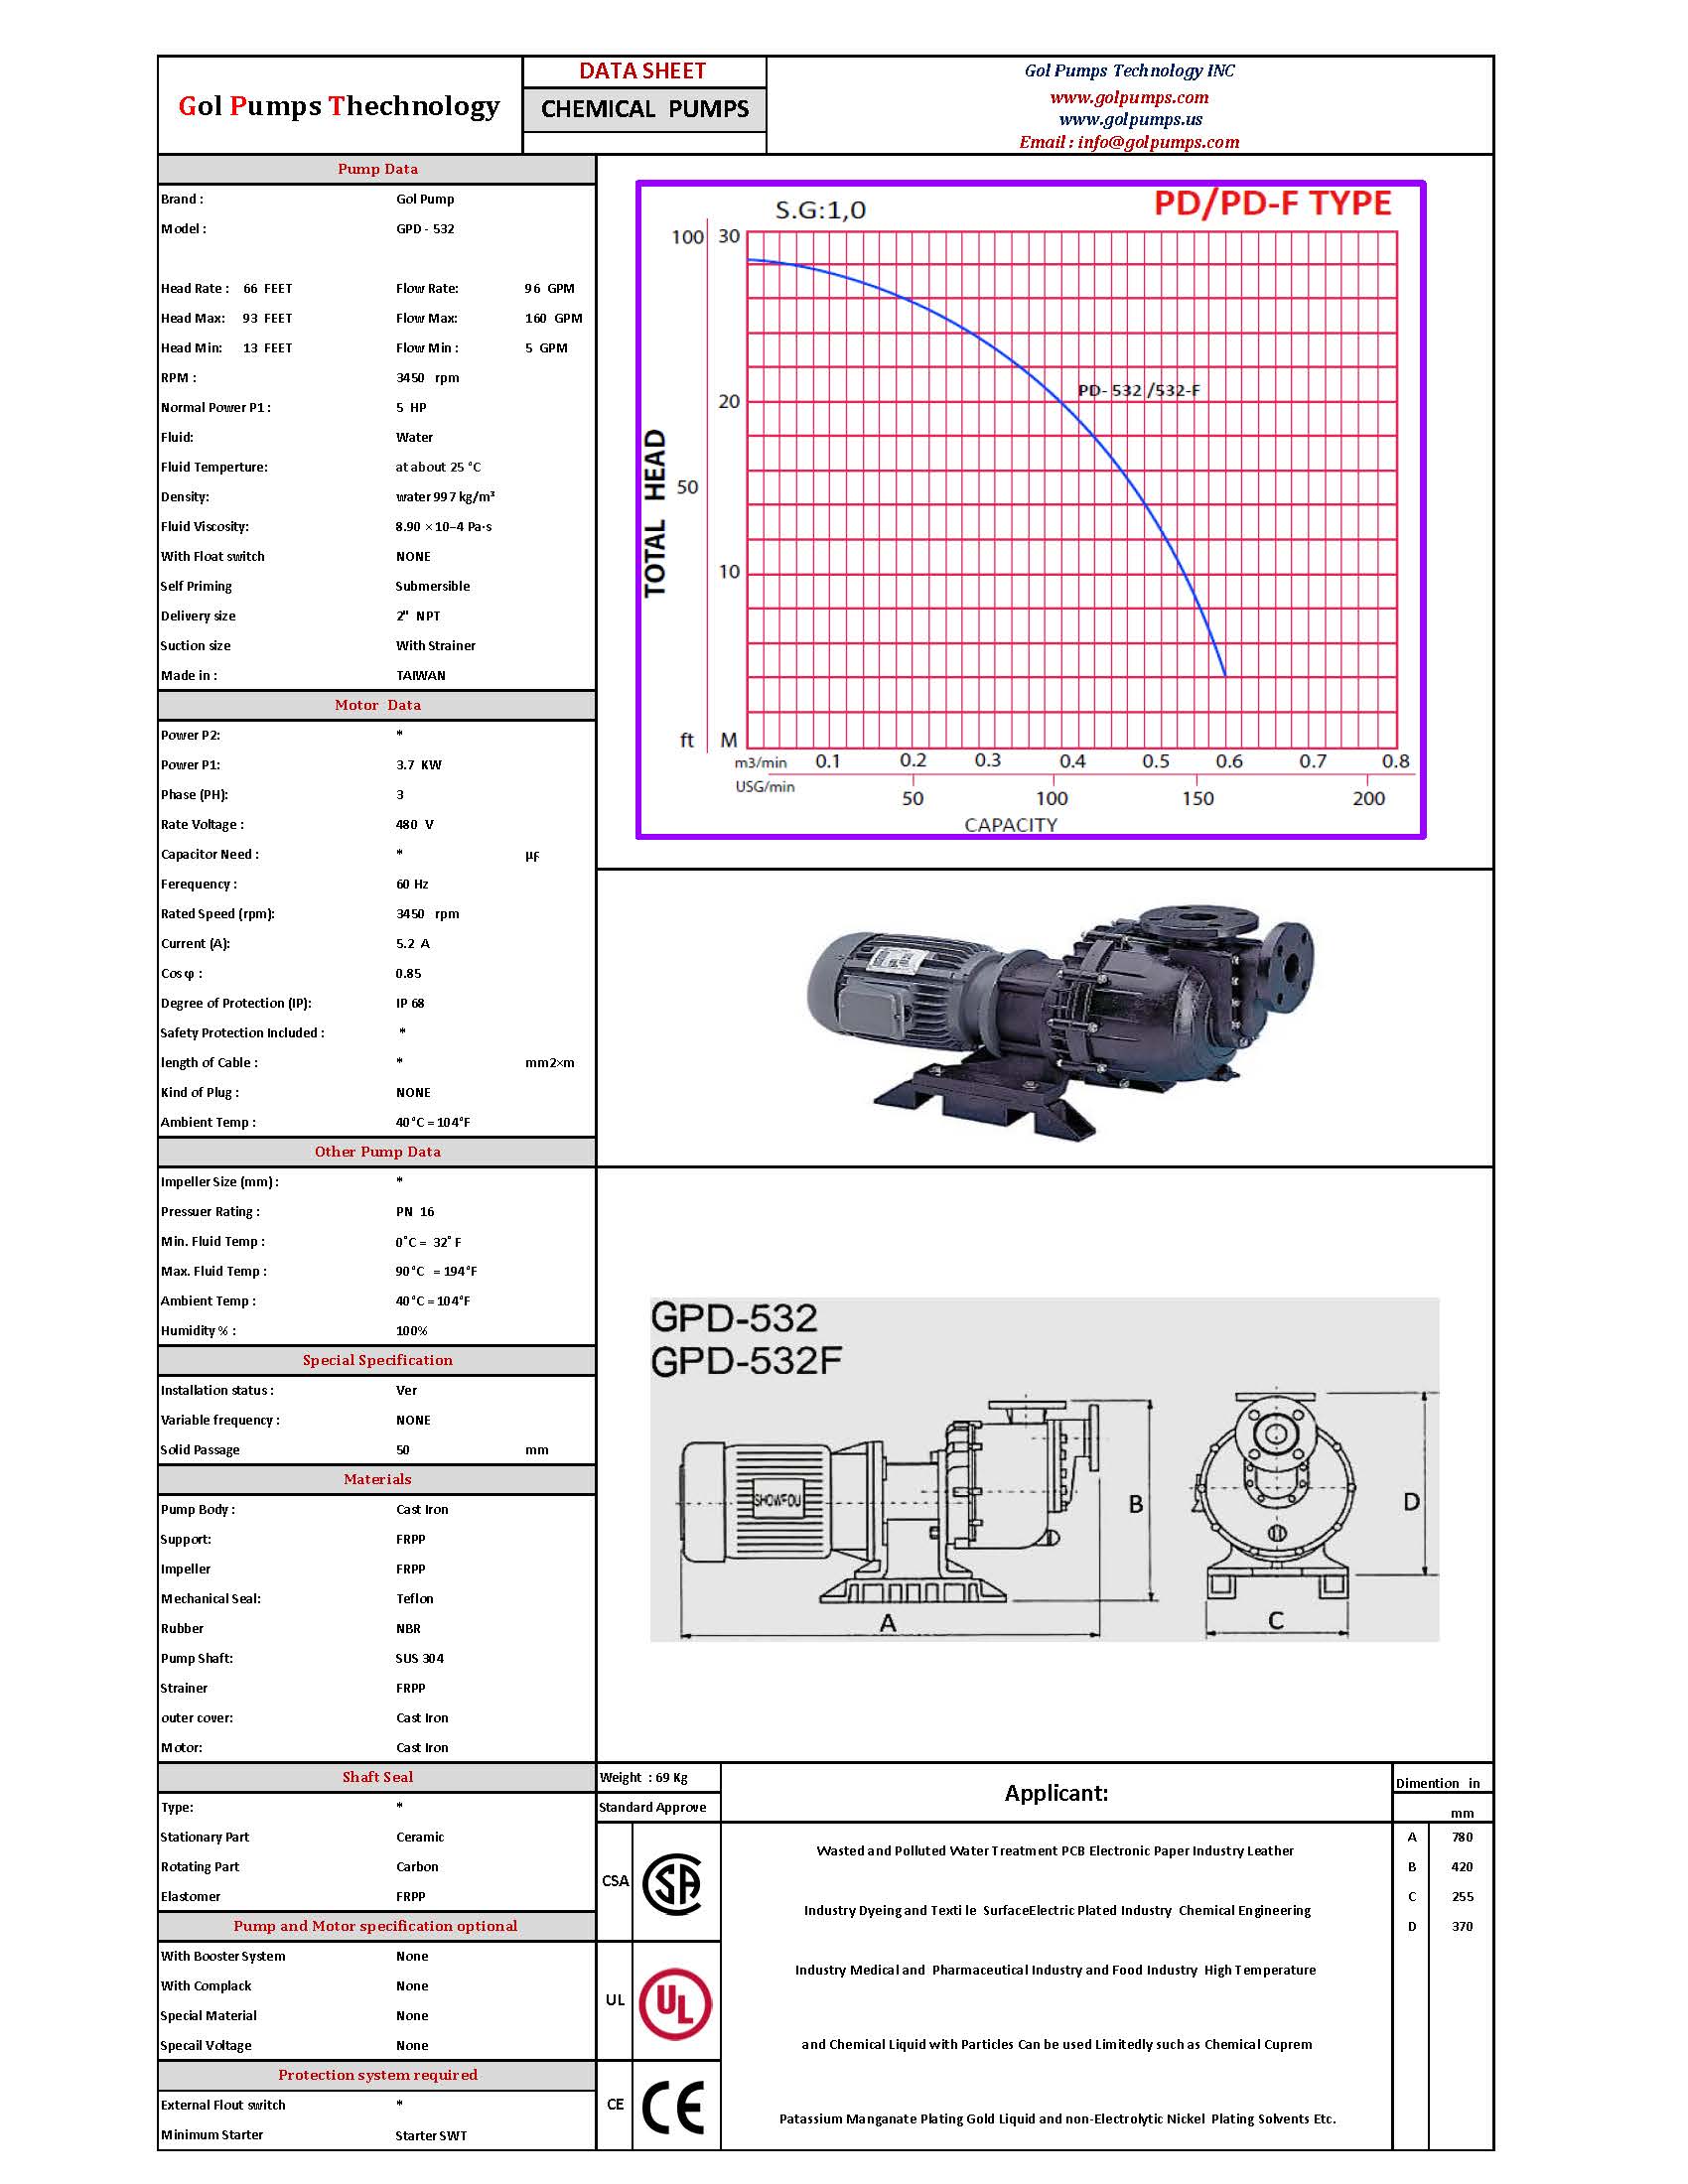 GPD-532 Chemical Pump - Data Sheet